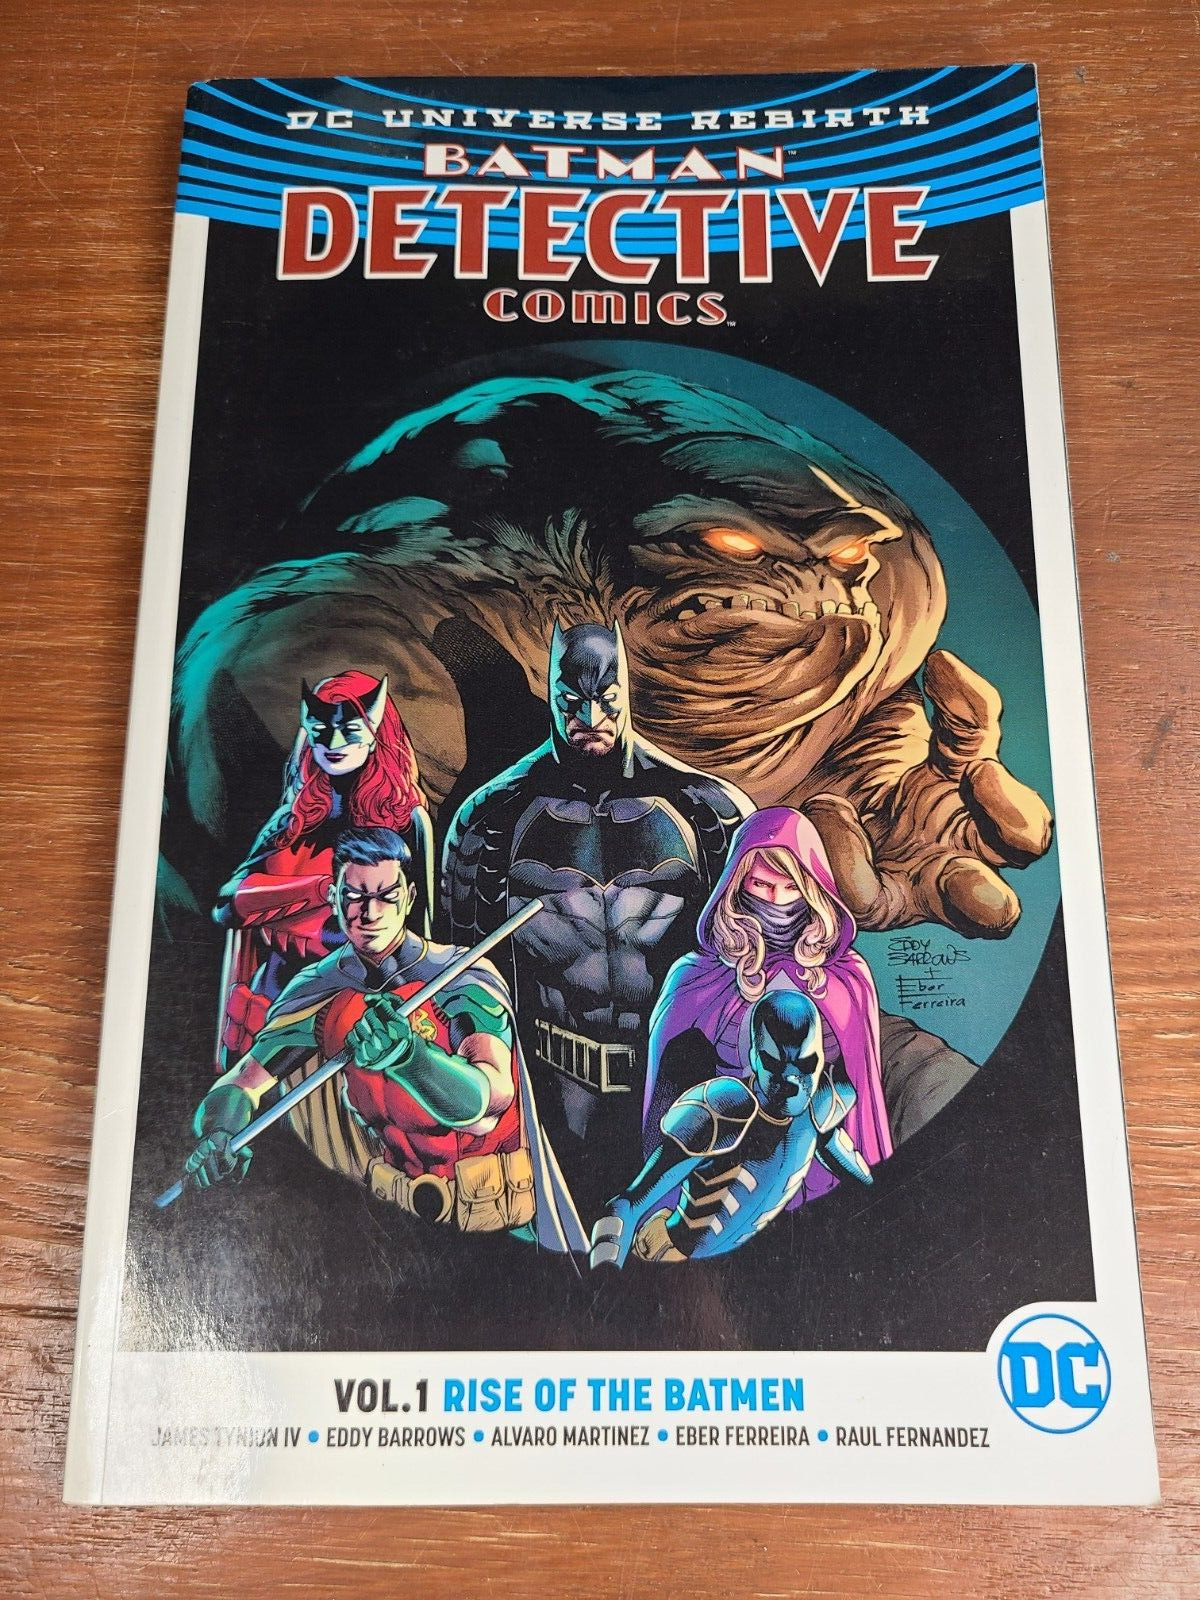 Batman: Detective Comics Vol. 1: Rise of the Batmen (Rebirth) by James Tynion IV